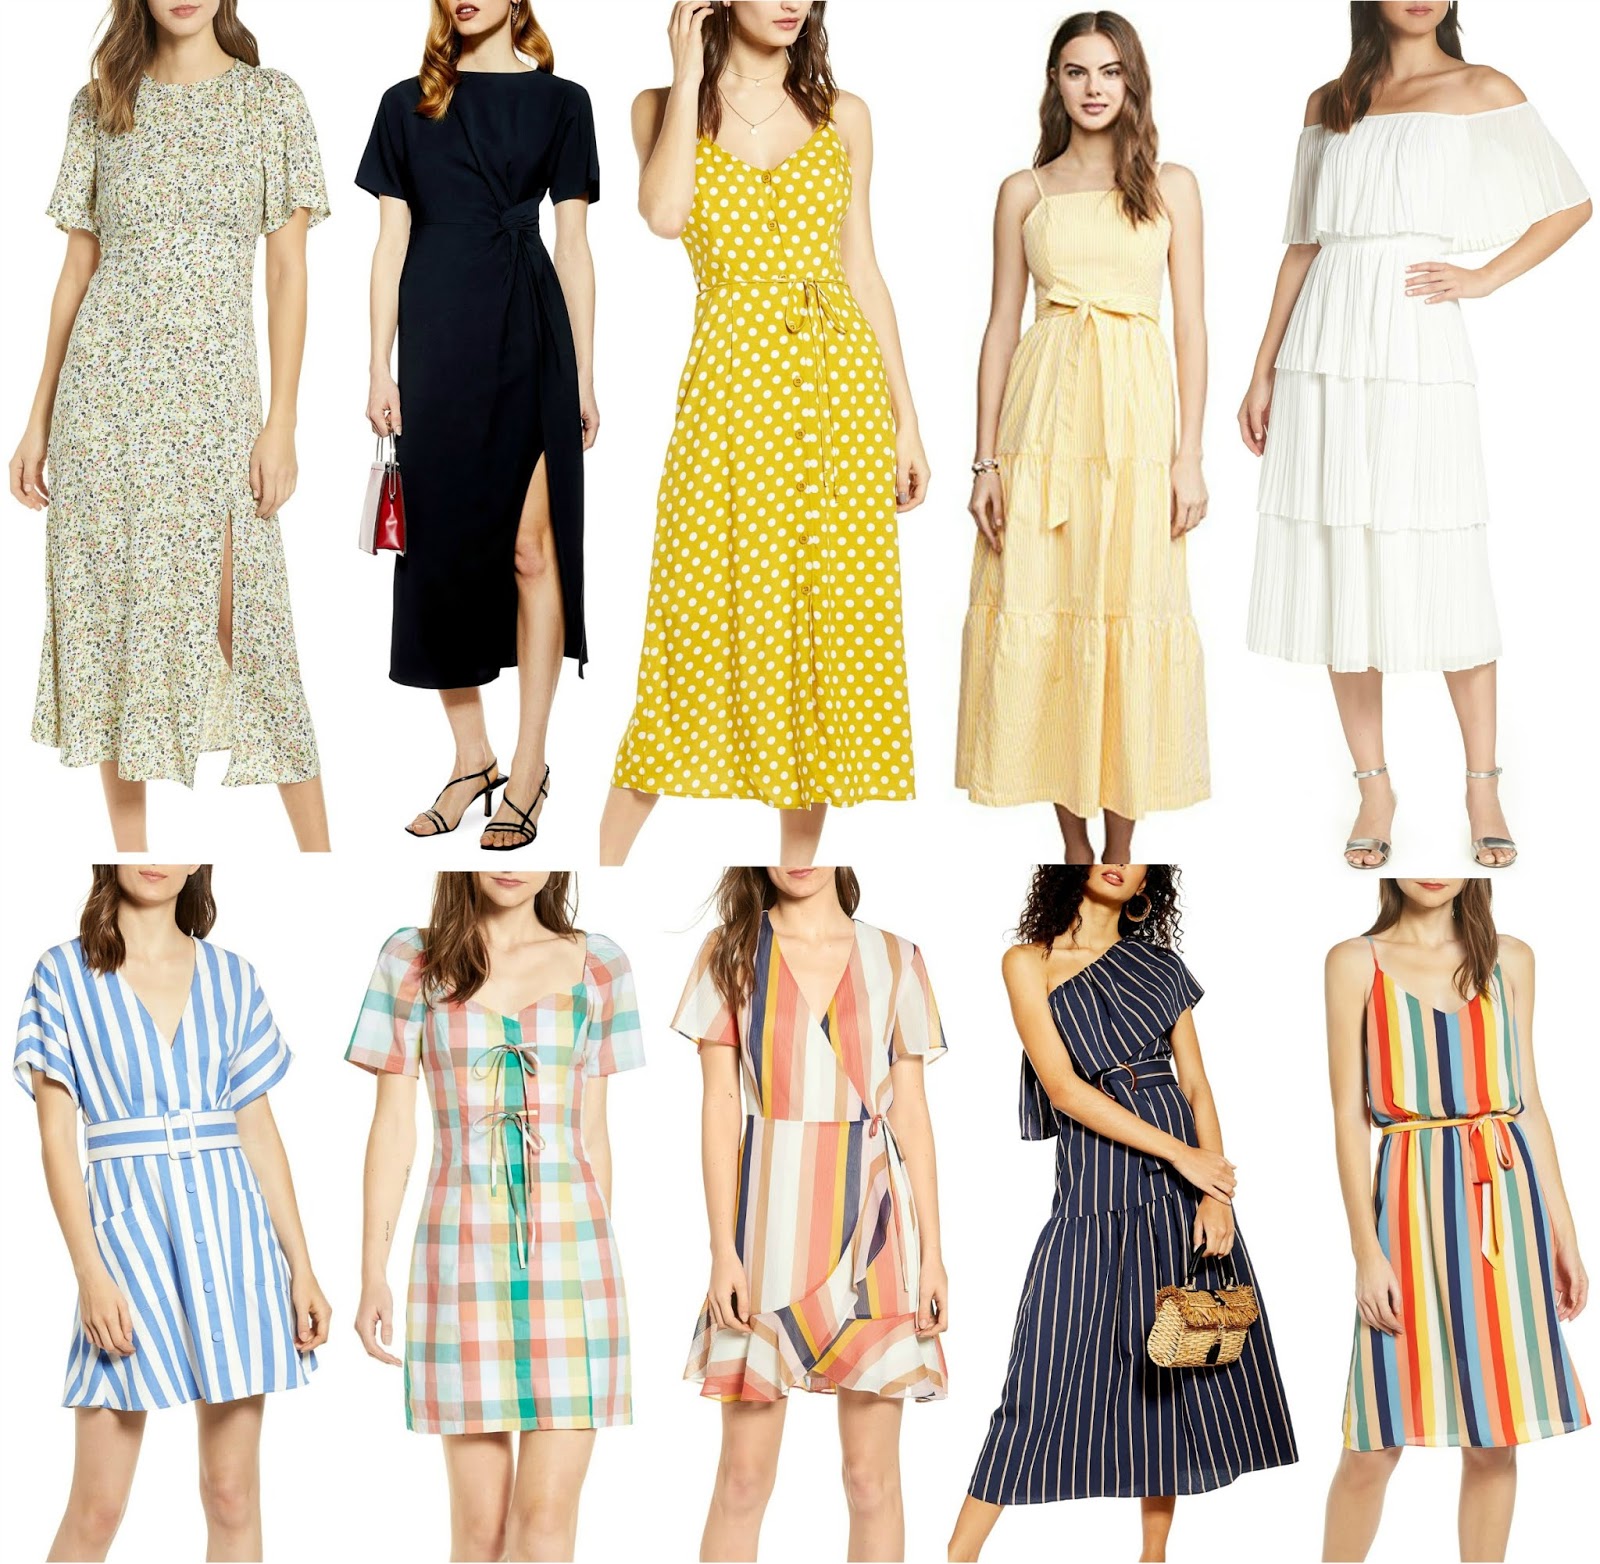 10 Spring Dresses Under $100 - alittlebitetc